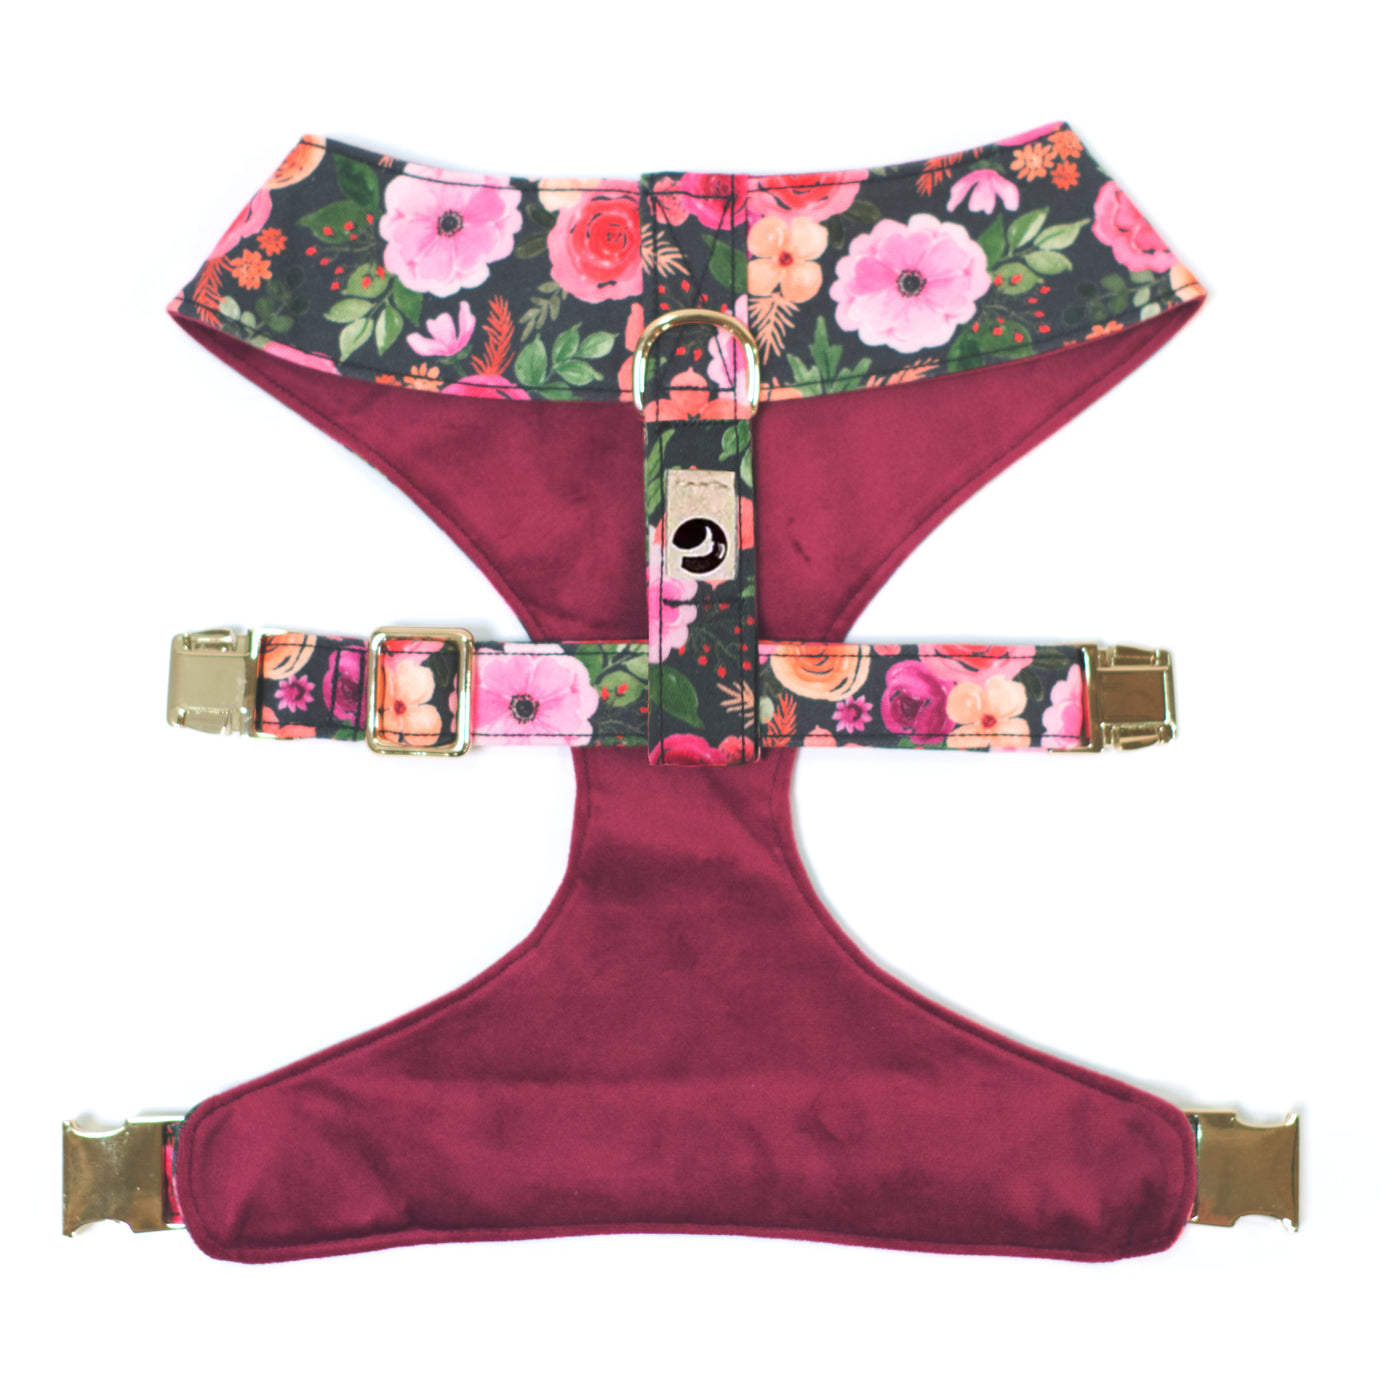 Top/back view of pink floral & velvet reversible dog harness